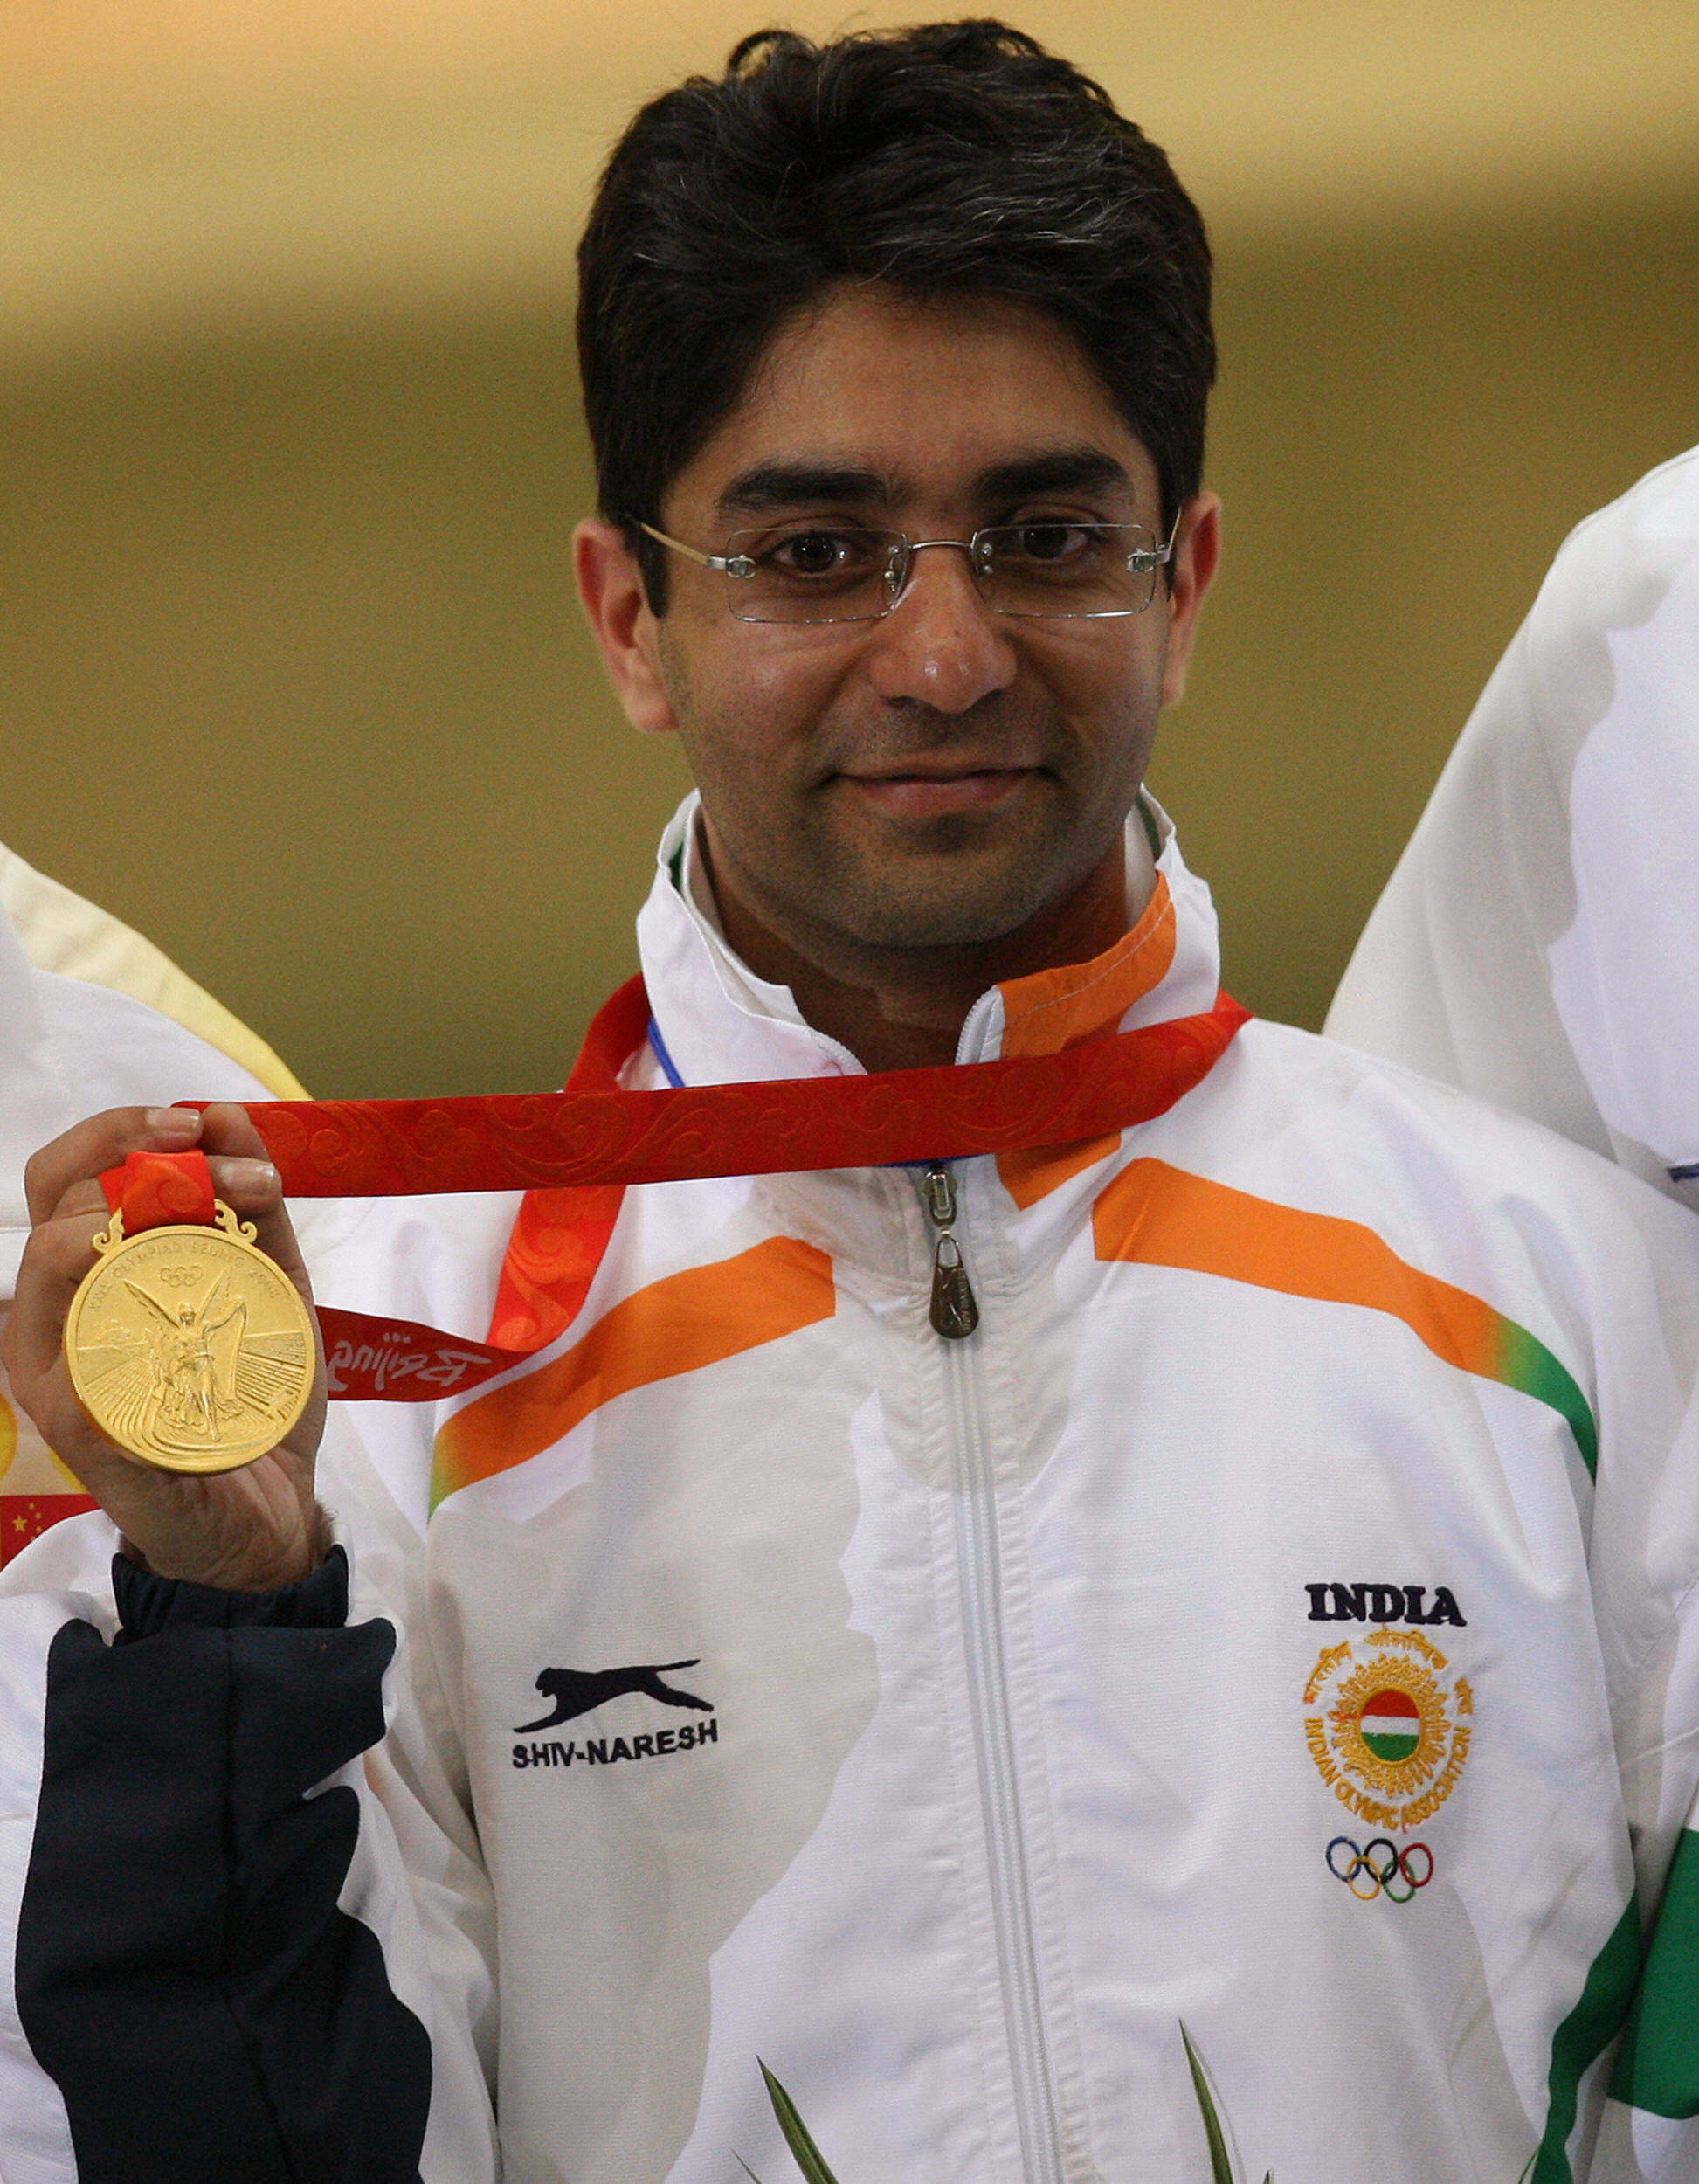 Gold Medalist Abhinav Bindra